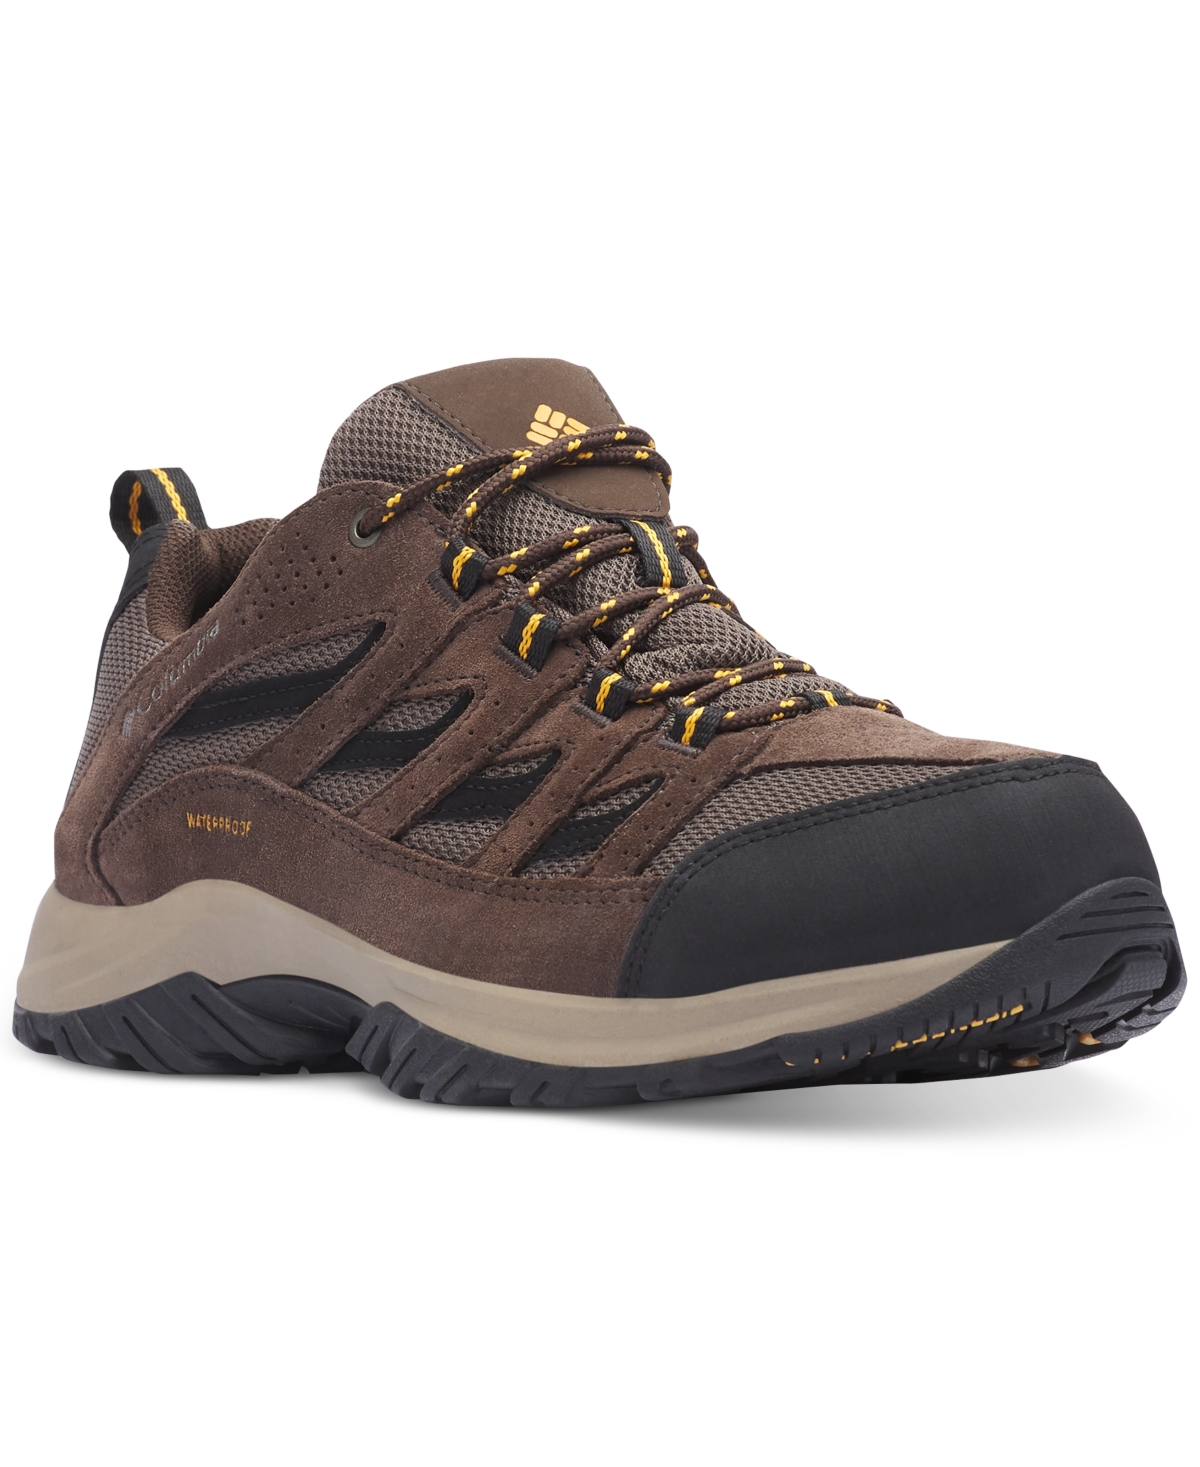 Columbia Men's Crestwood Waterproof Trail Boots - Mud, Squash $54 + Free Shipping